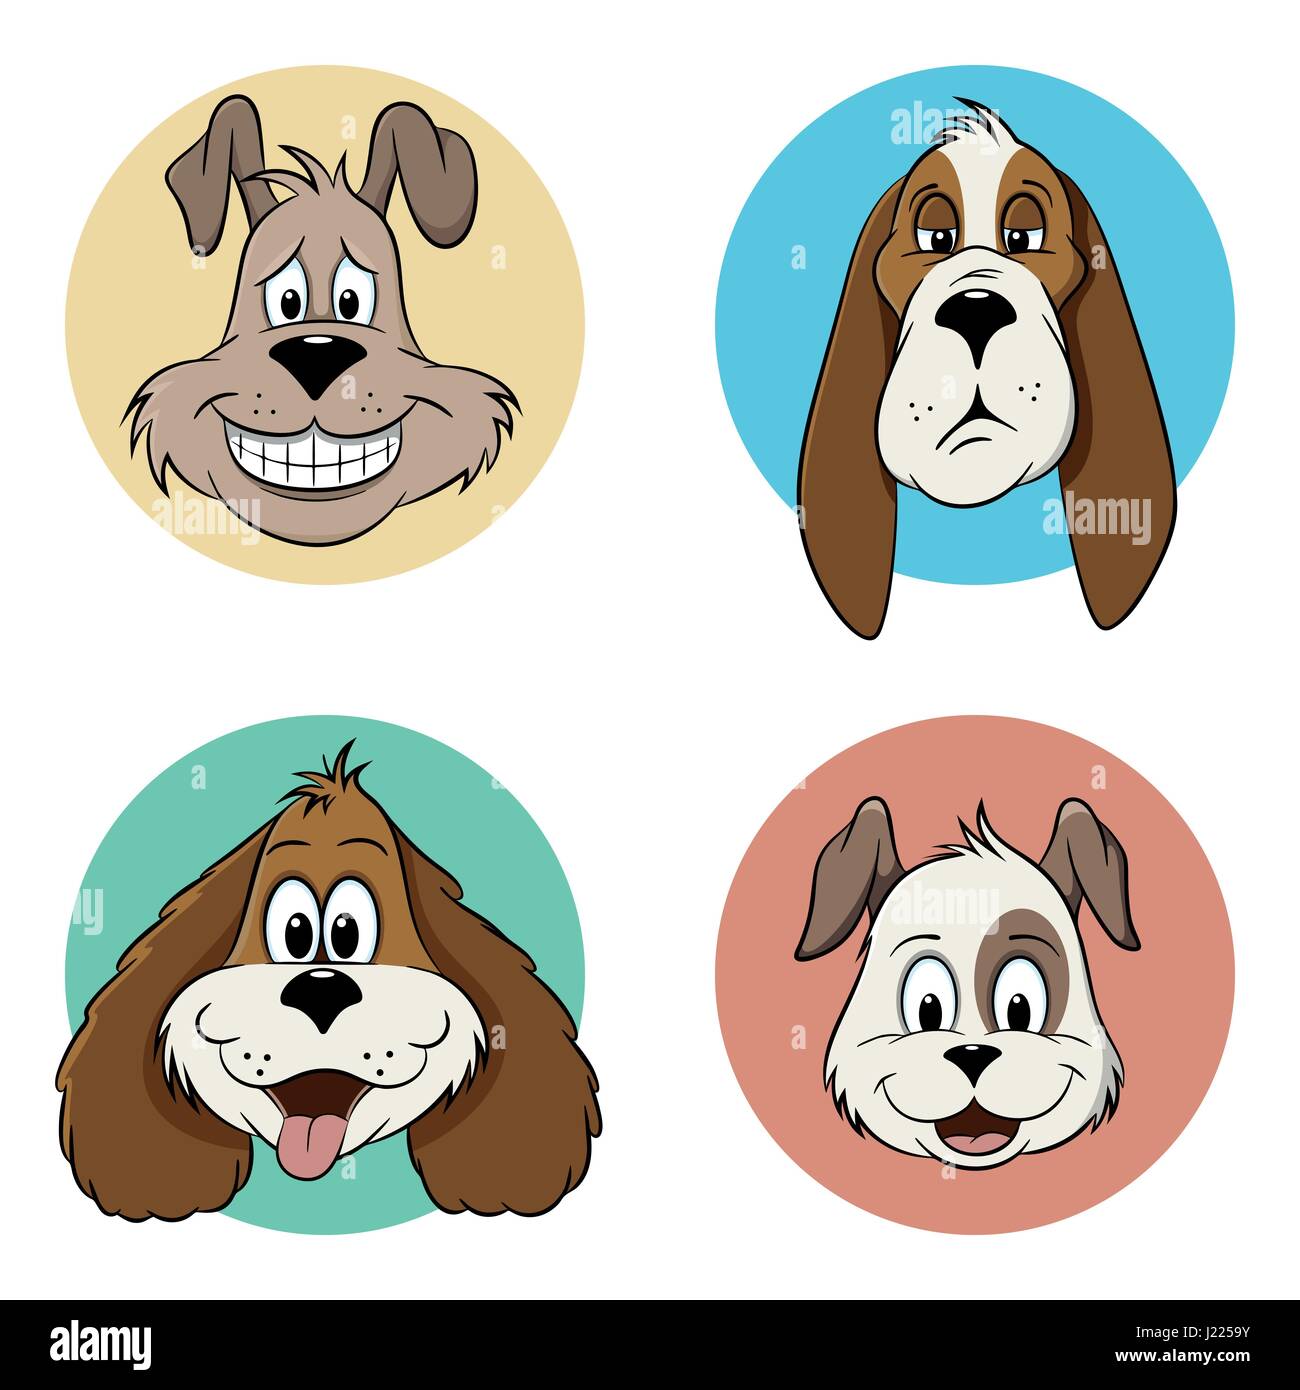 3400 Dog Profile Icon Illustrations RoyaltyFree Vector Graphics  Clip  Art  iStock